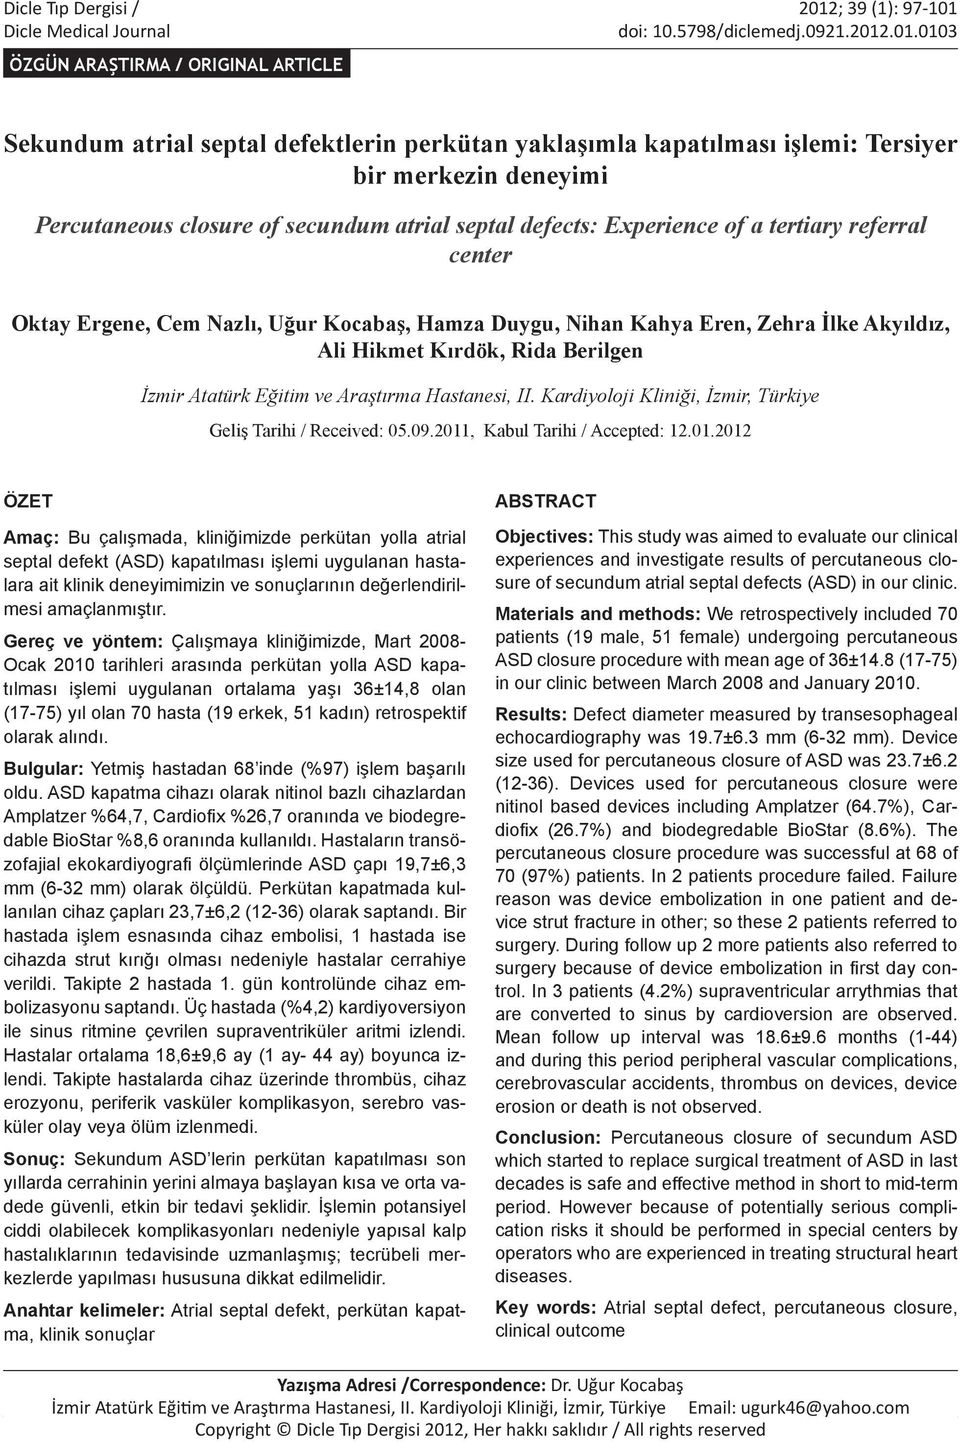 Dicle Medical Journal doi: 10.5798/diclemedj.0921.2012